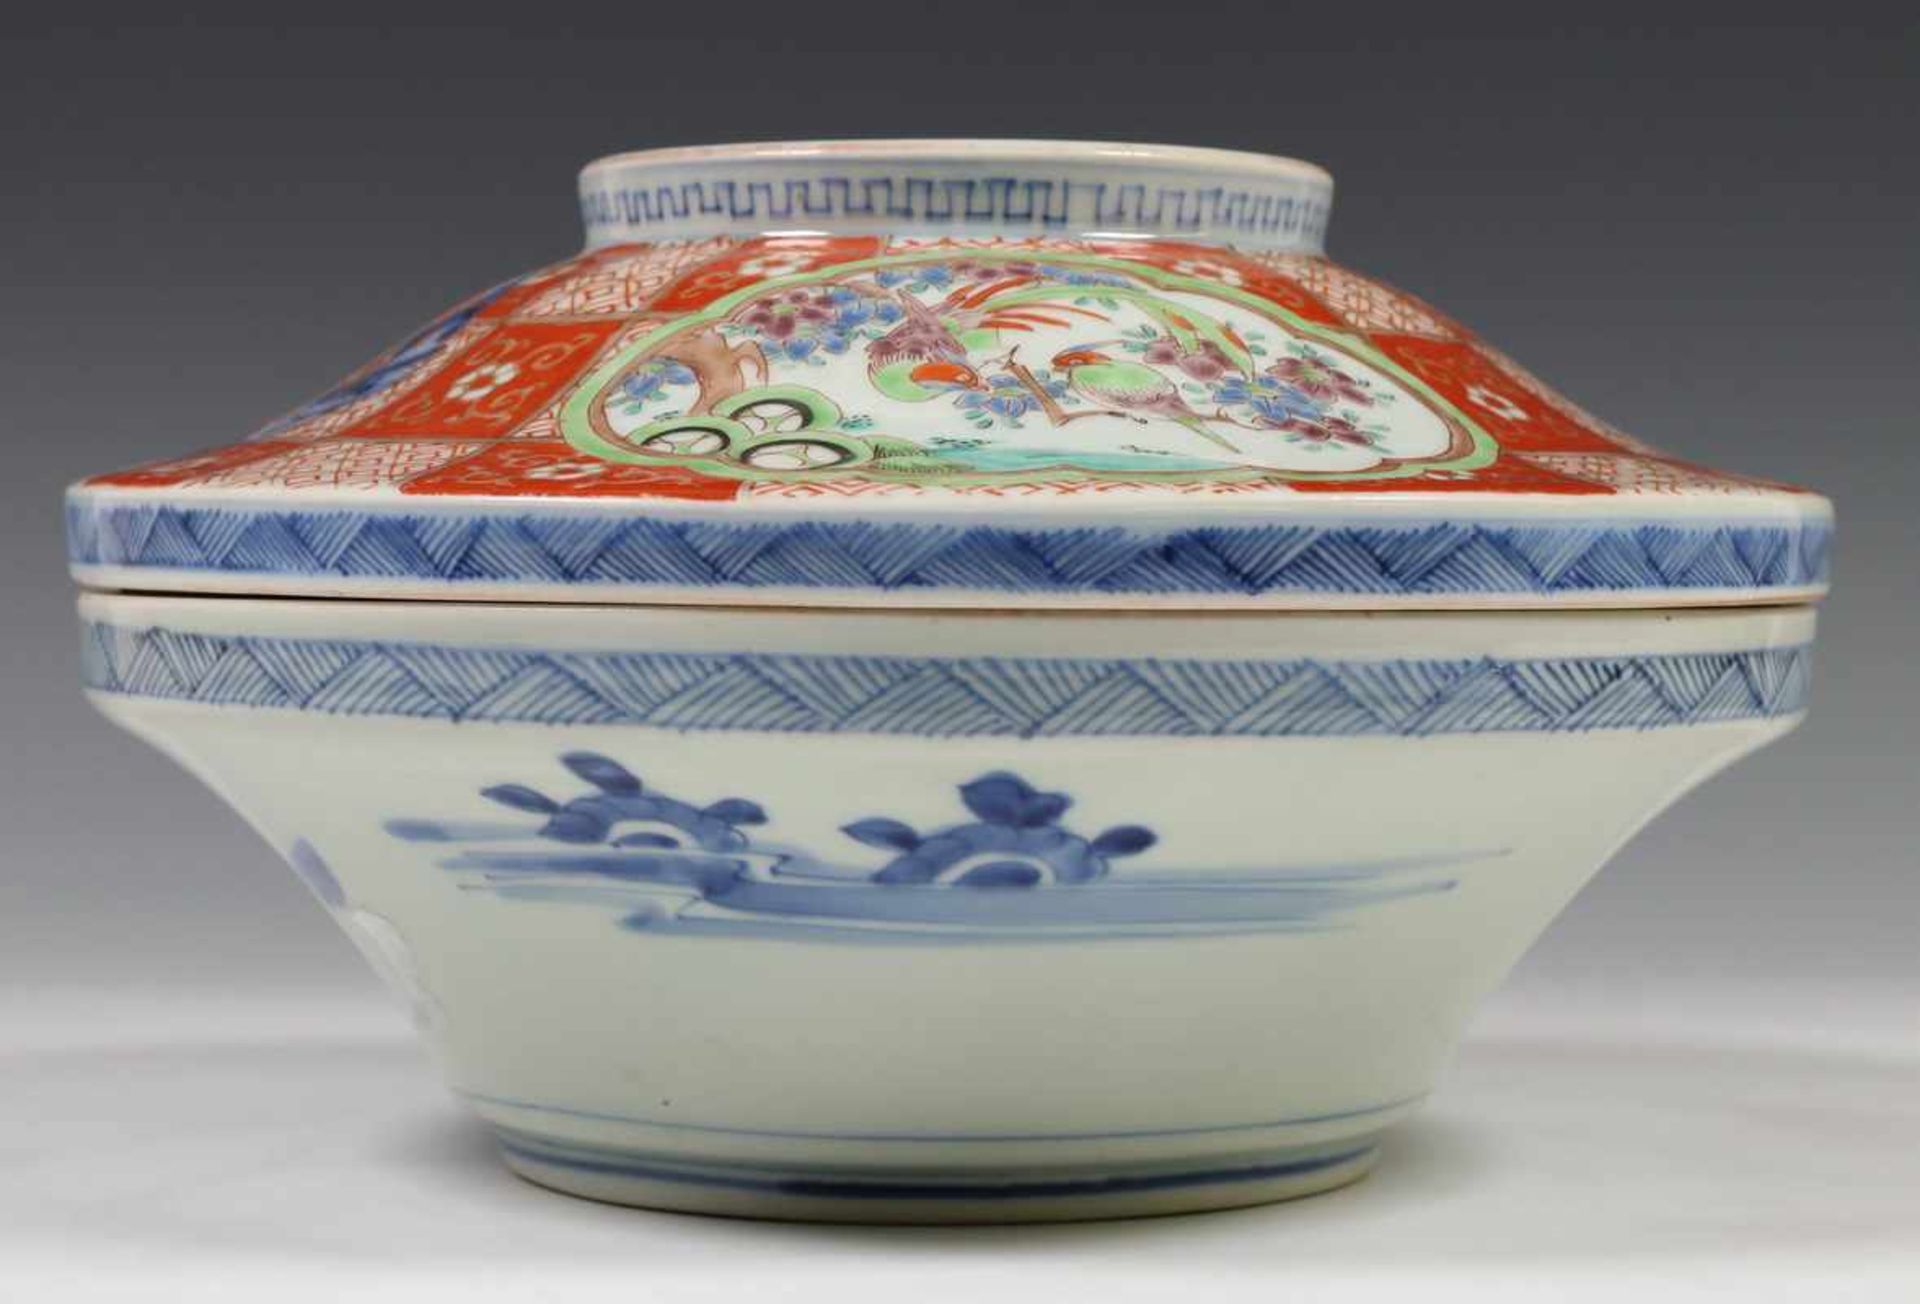 Japan, blauw-wit porseleinen dekselkom, vroeg Meiji periode,met gekleurd decor in vakwerk op rood-